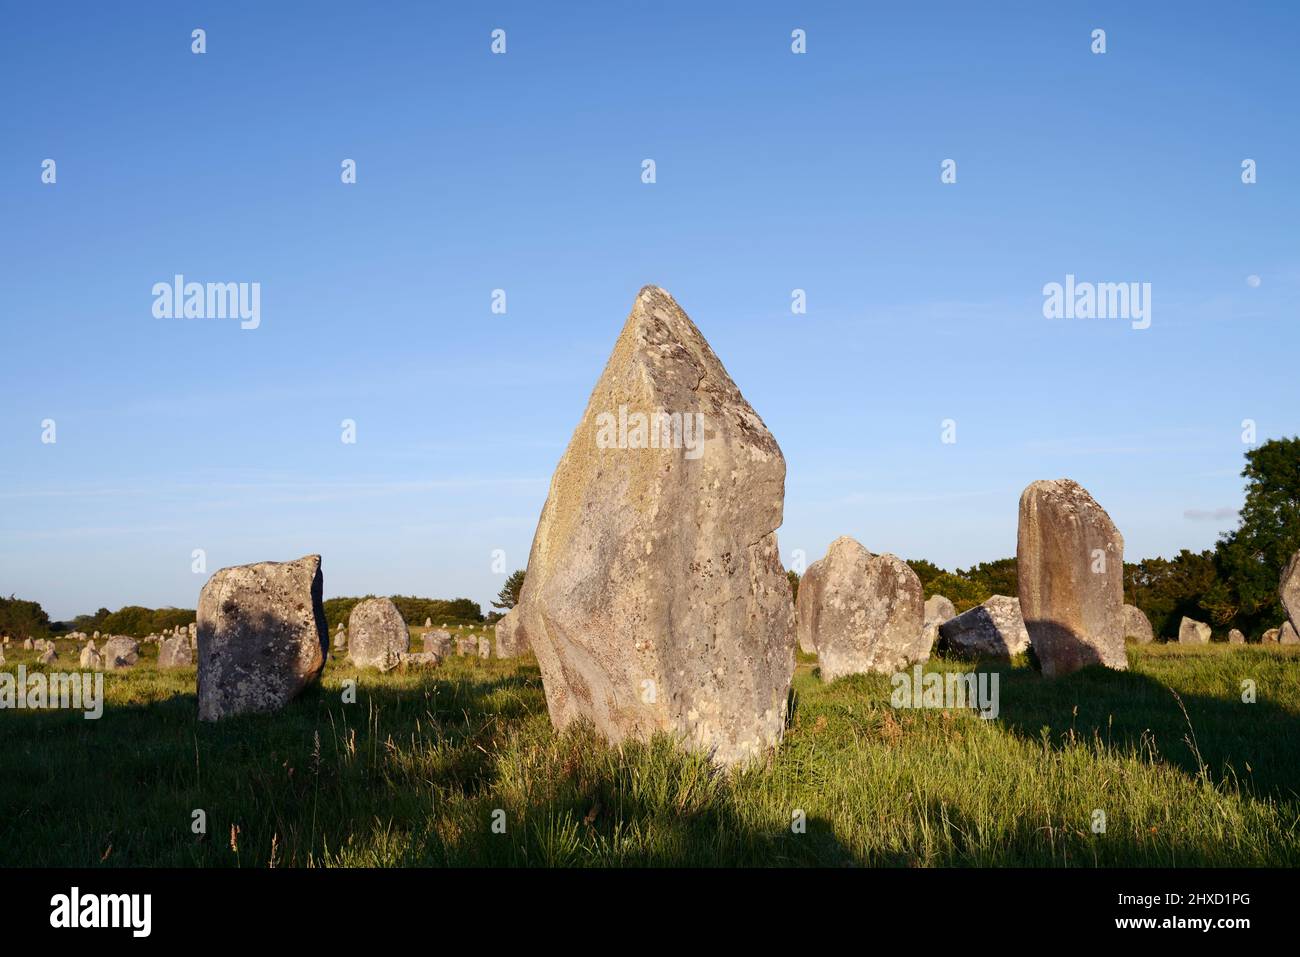 Megaliths, Alignements du Menec, Alignements of Carnac, Le Menec, Department of Morbihan, Brittany, France Stock Photo